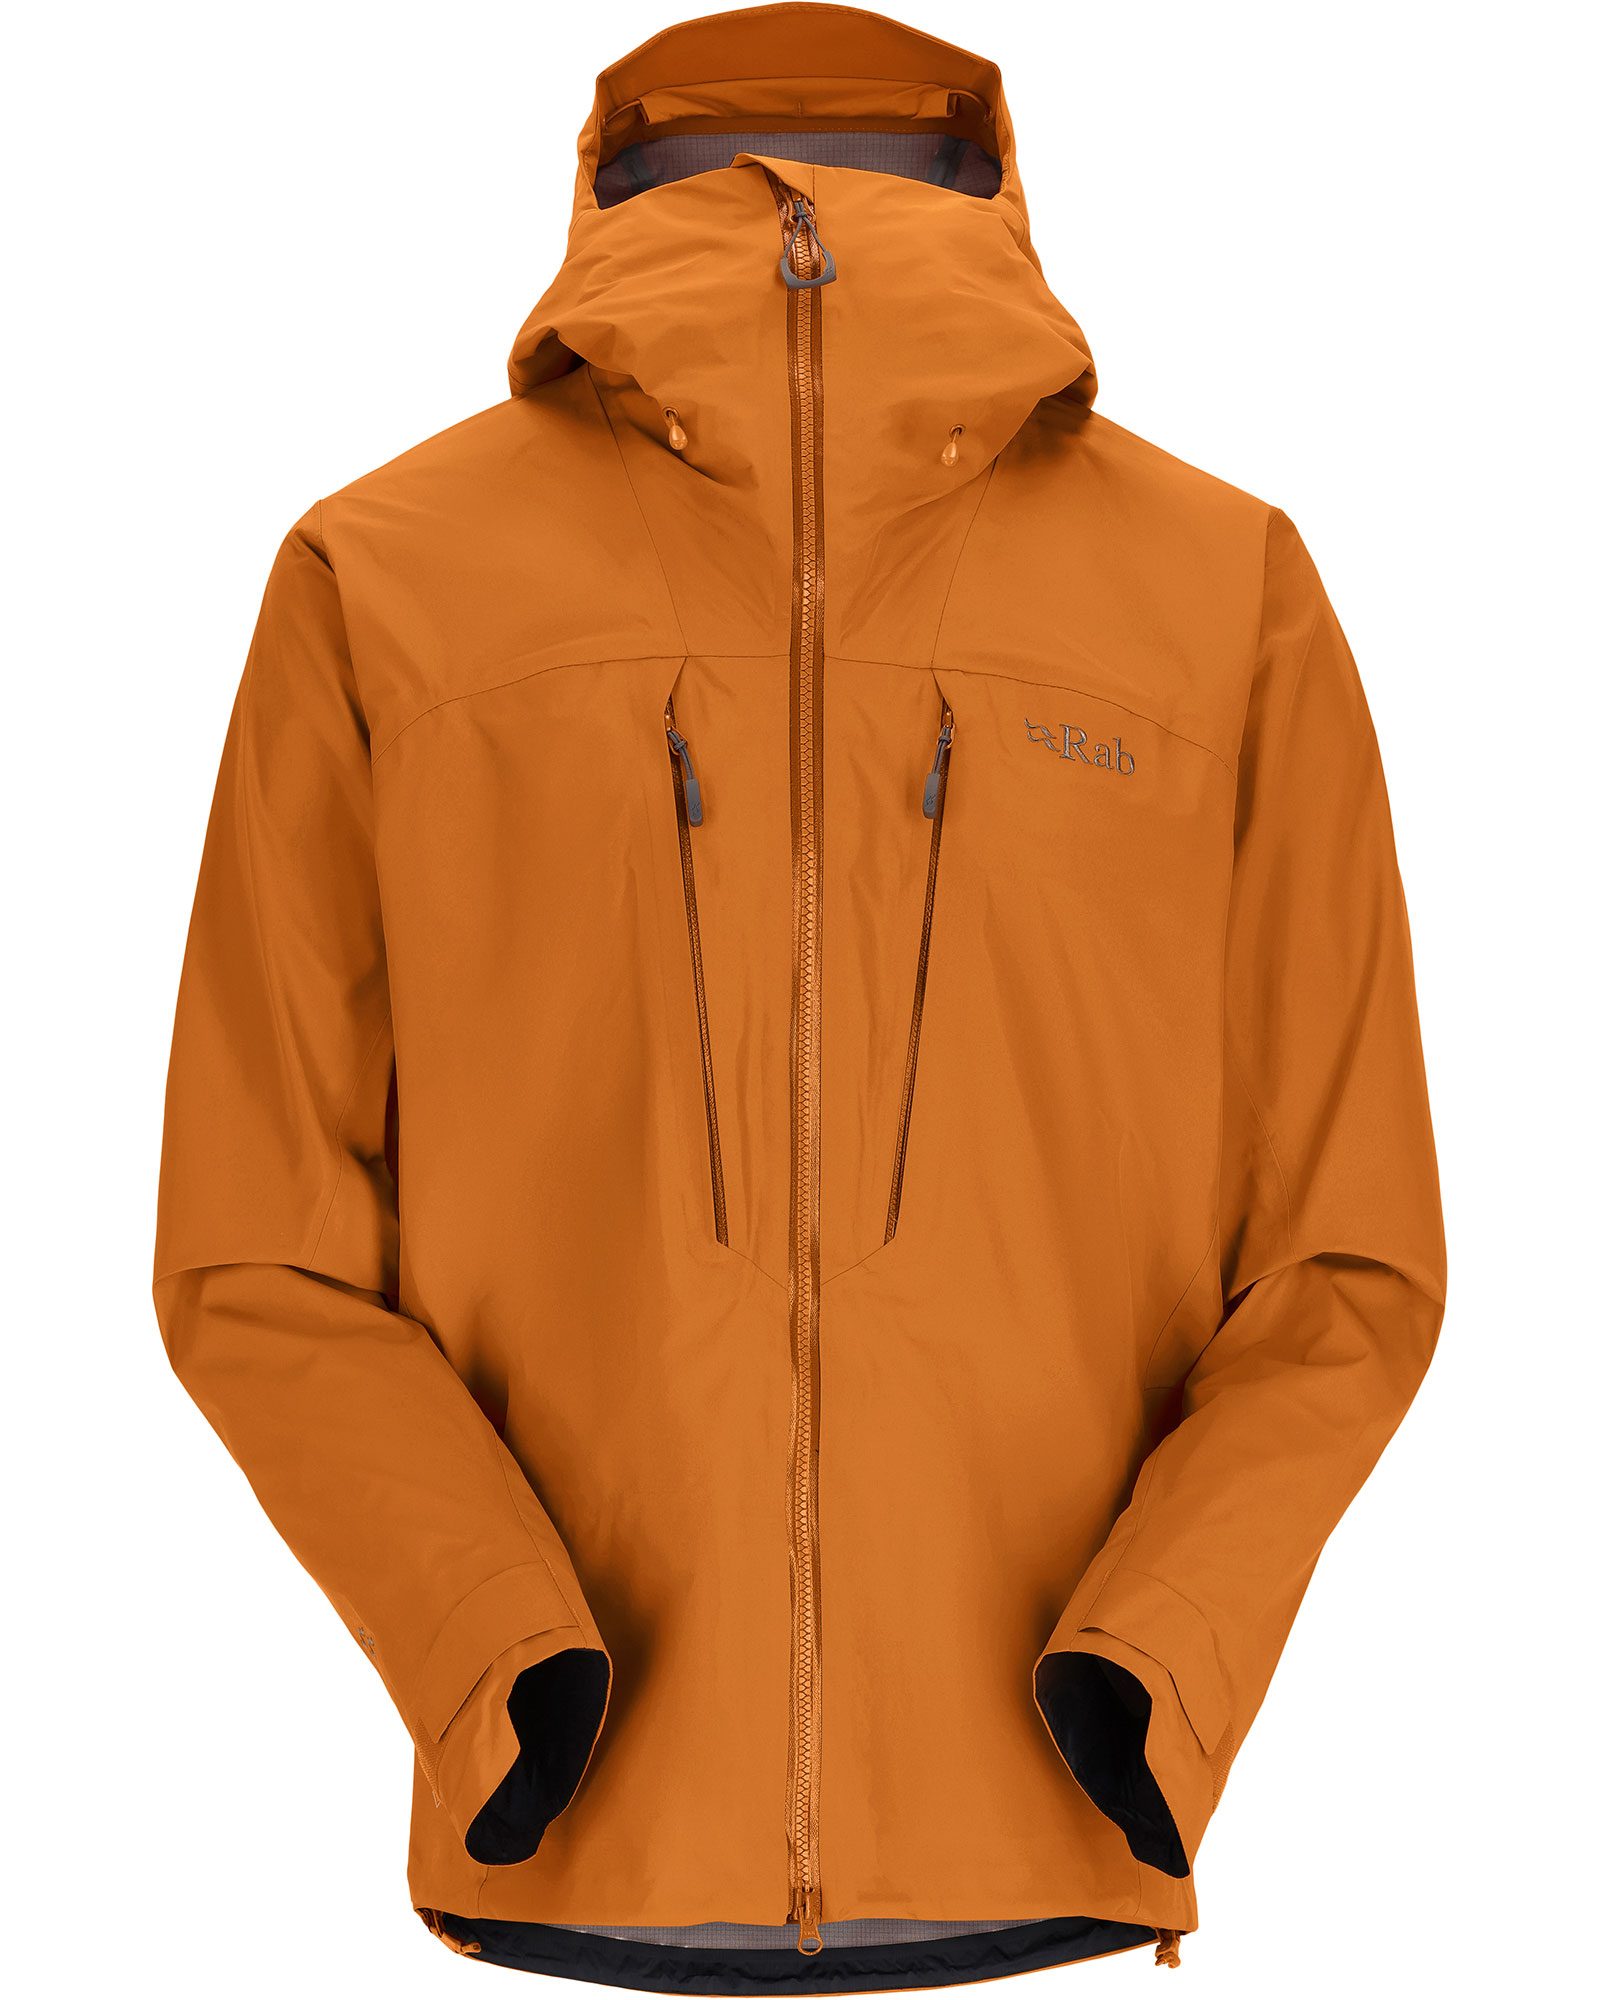 Rab Latok Alpine GORE TEX Pro Men’s Jacket - Marmalade XL